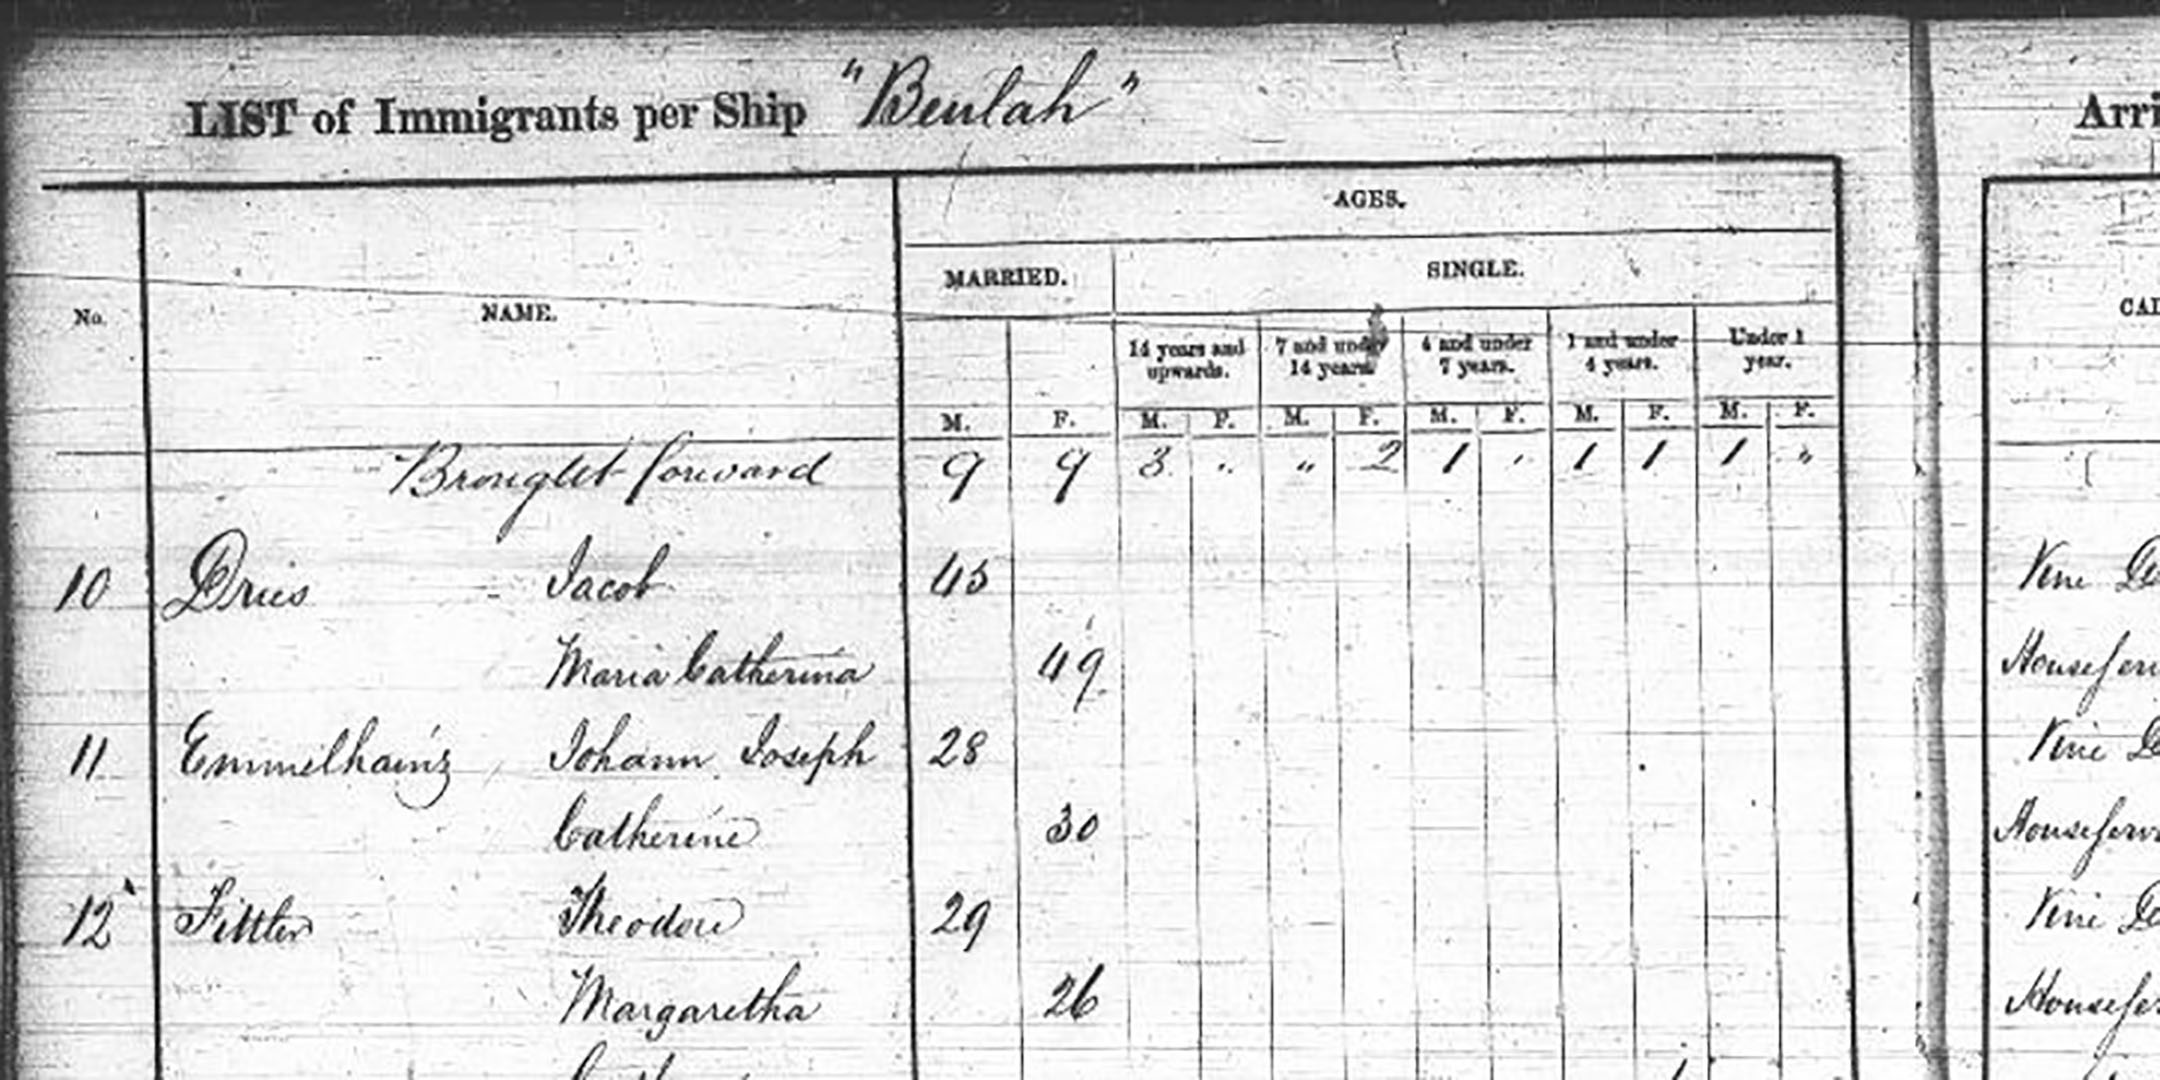 Johann and Katharina Emmelhainz on the Beulah passenger list, 1849. Courtesy NSW State Archives Reel 2145, [4/4820].